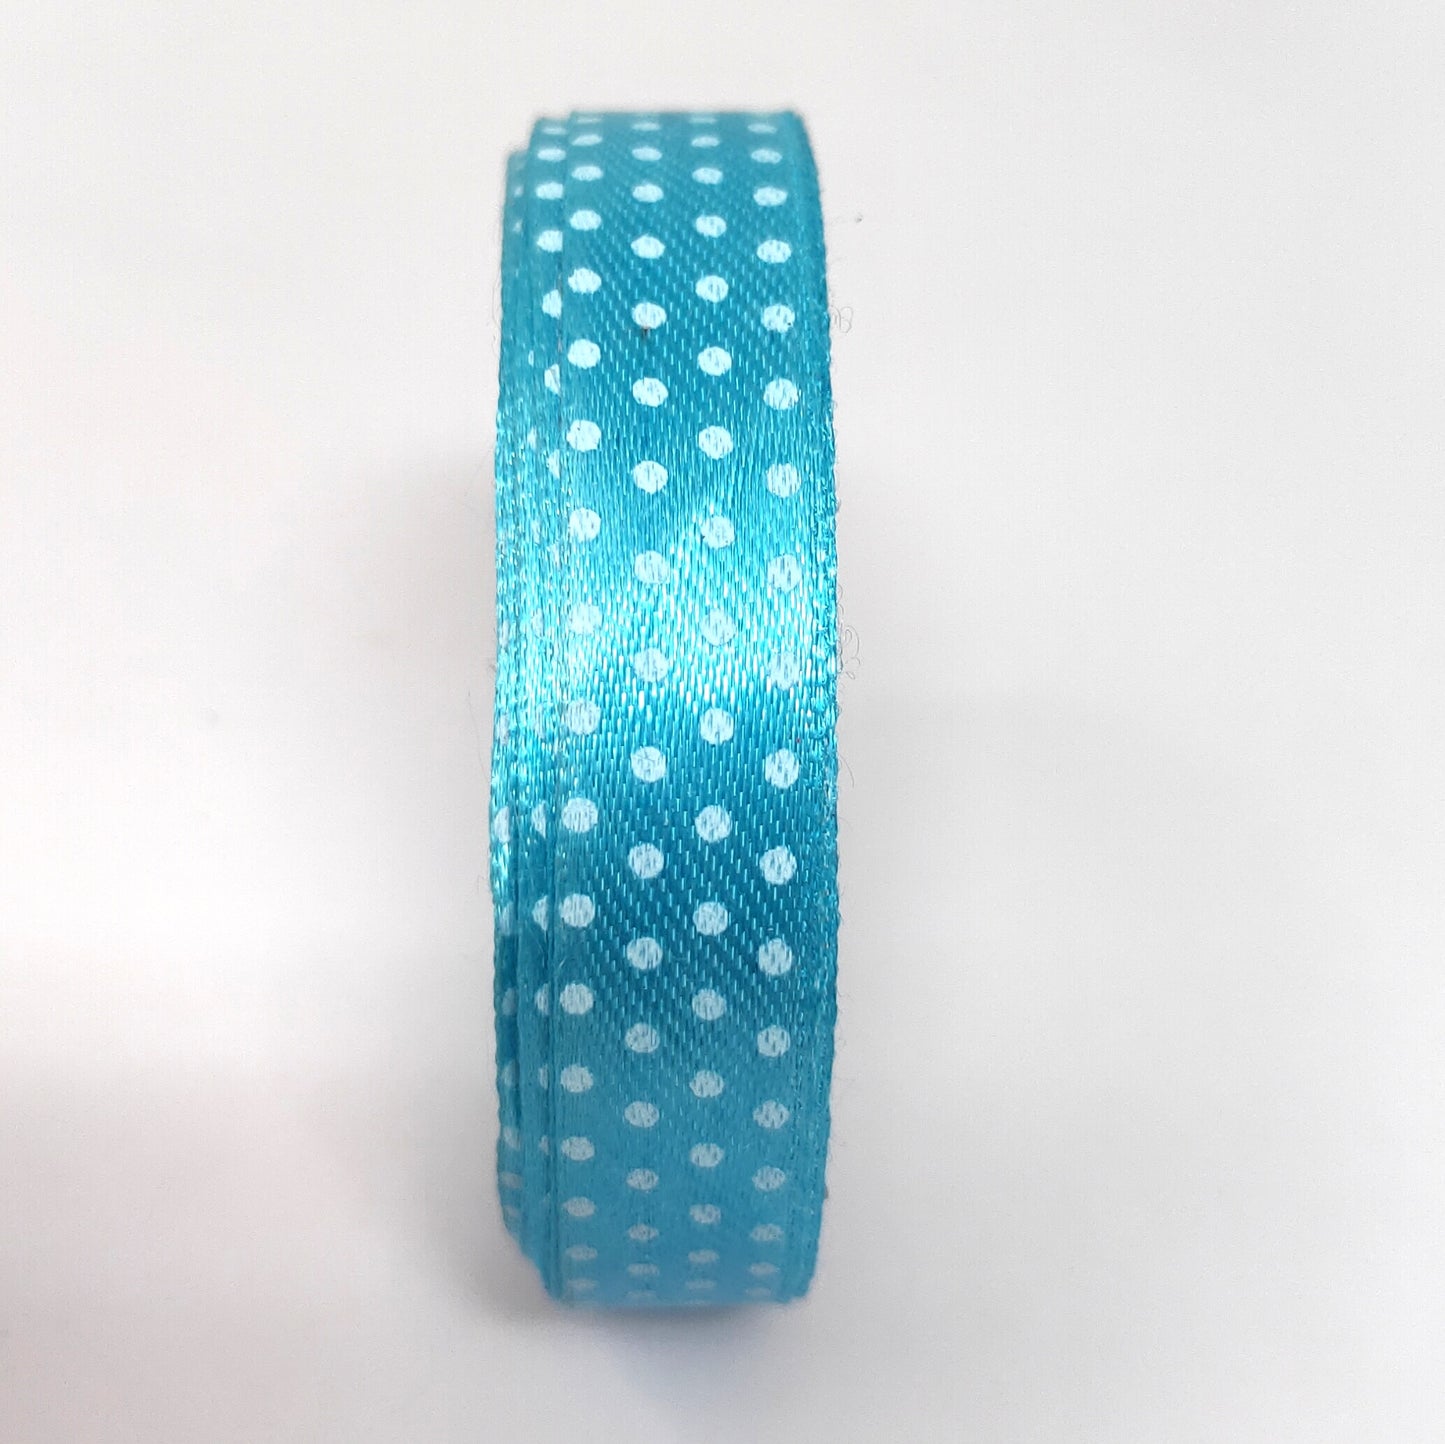 12.5 mm (Half Inch) Dot Print Turquoise Satin Ribbon (018)